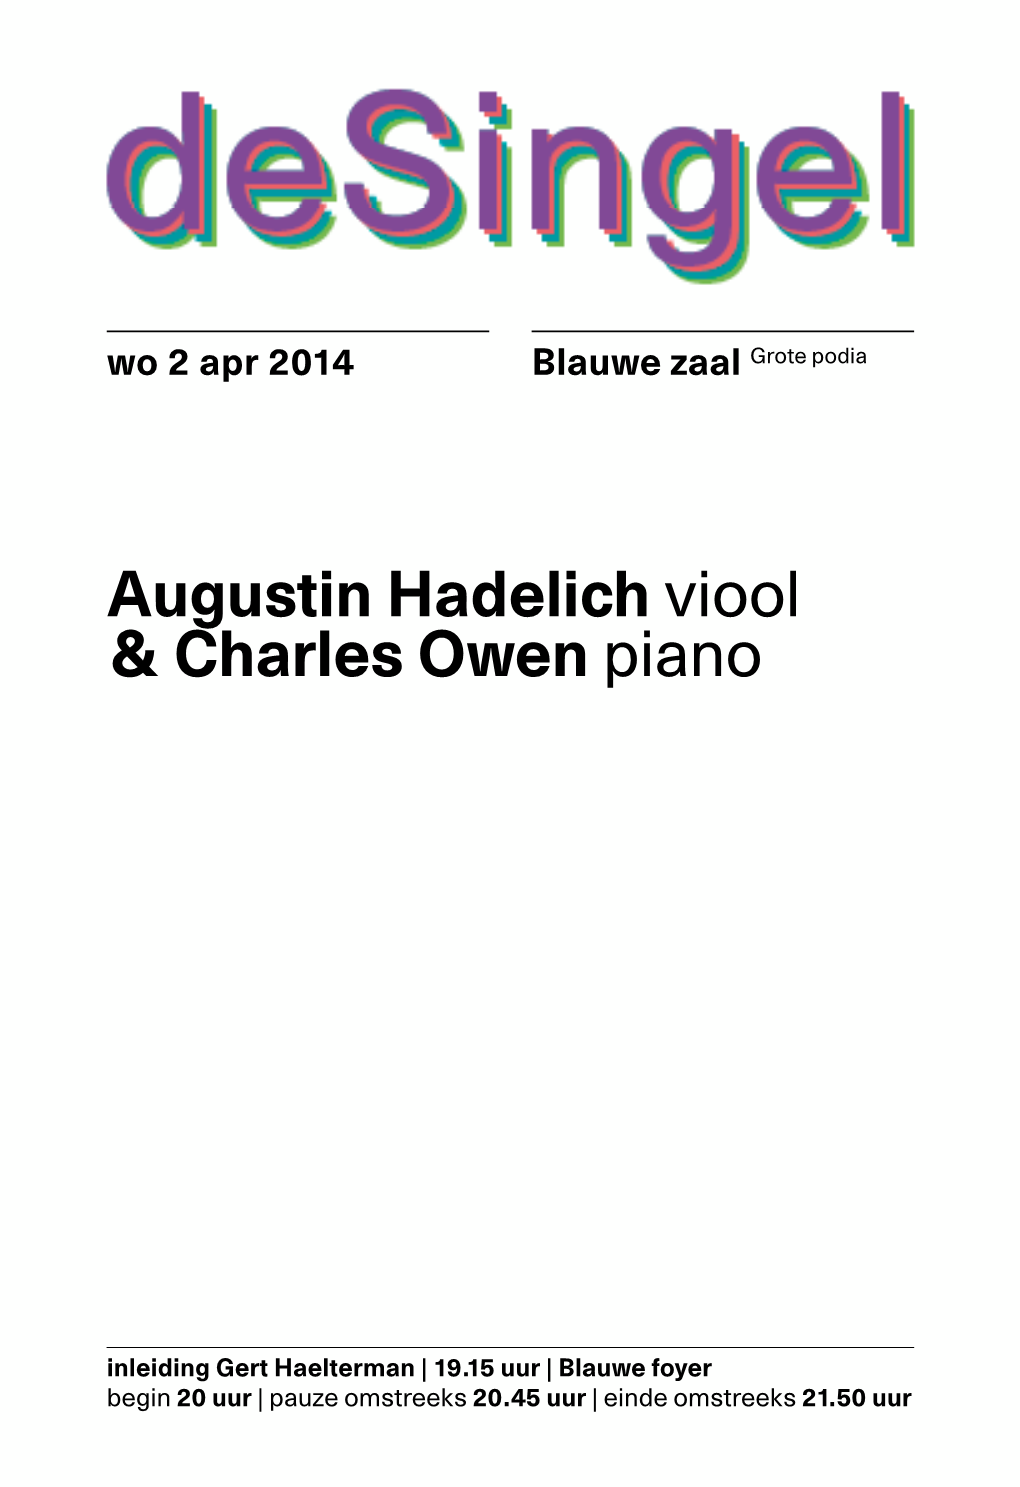 Augustin Hadelich Viool & Charles Owen Piano